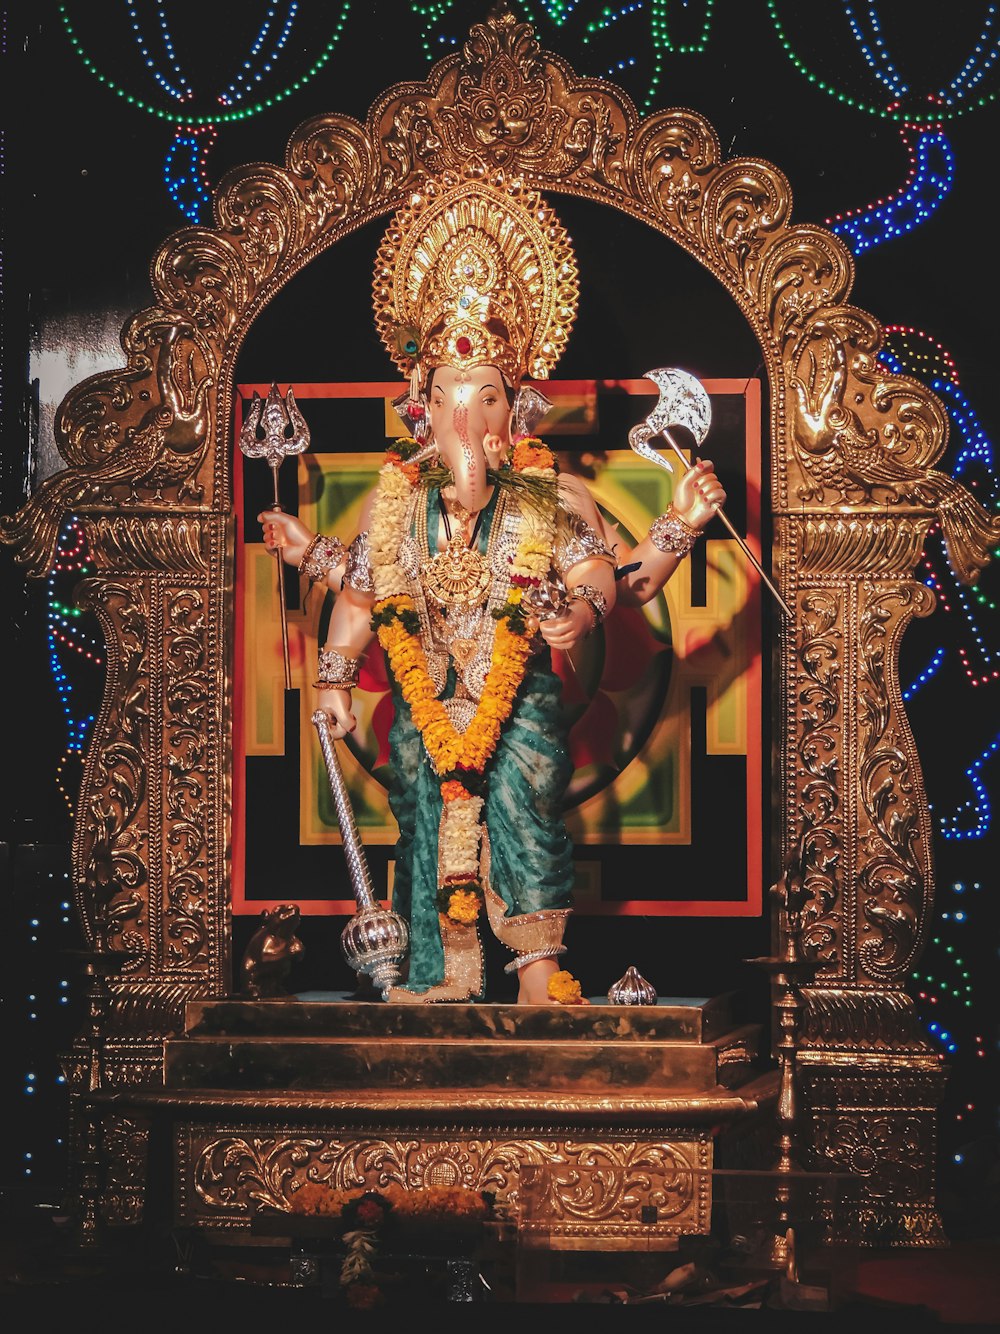 gold hindu deity figurine on brown wooden table